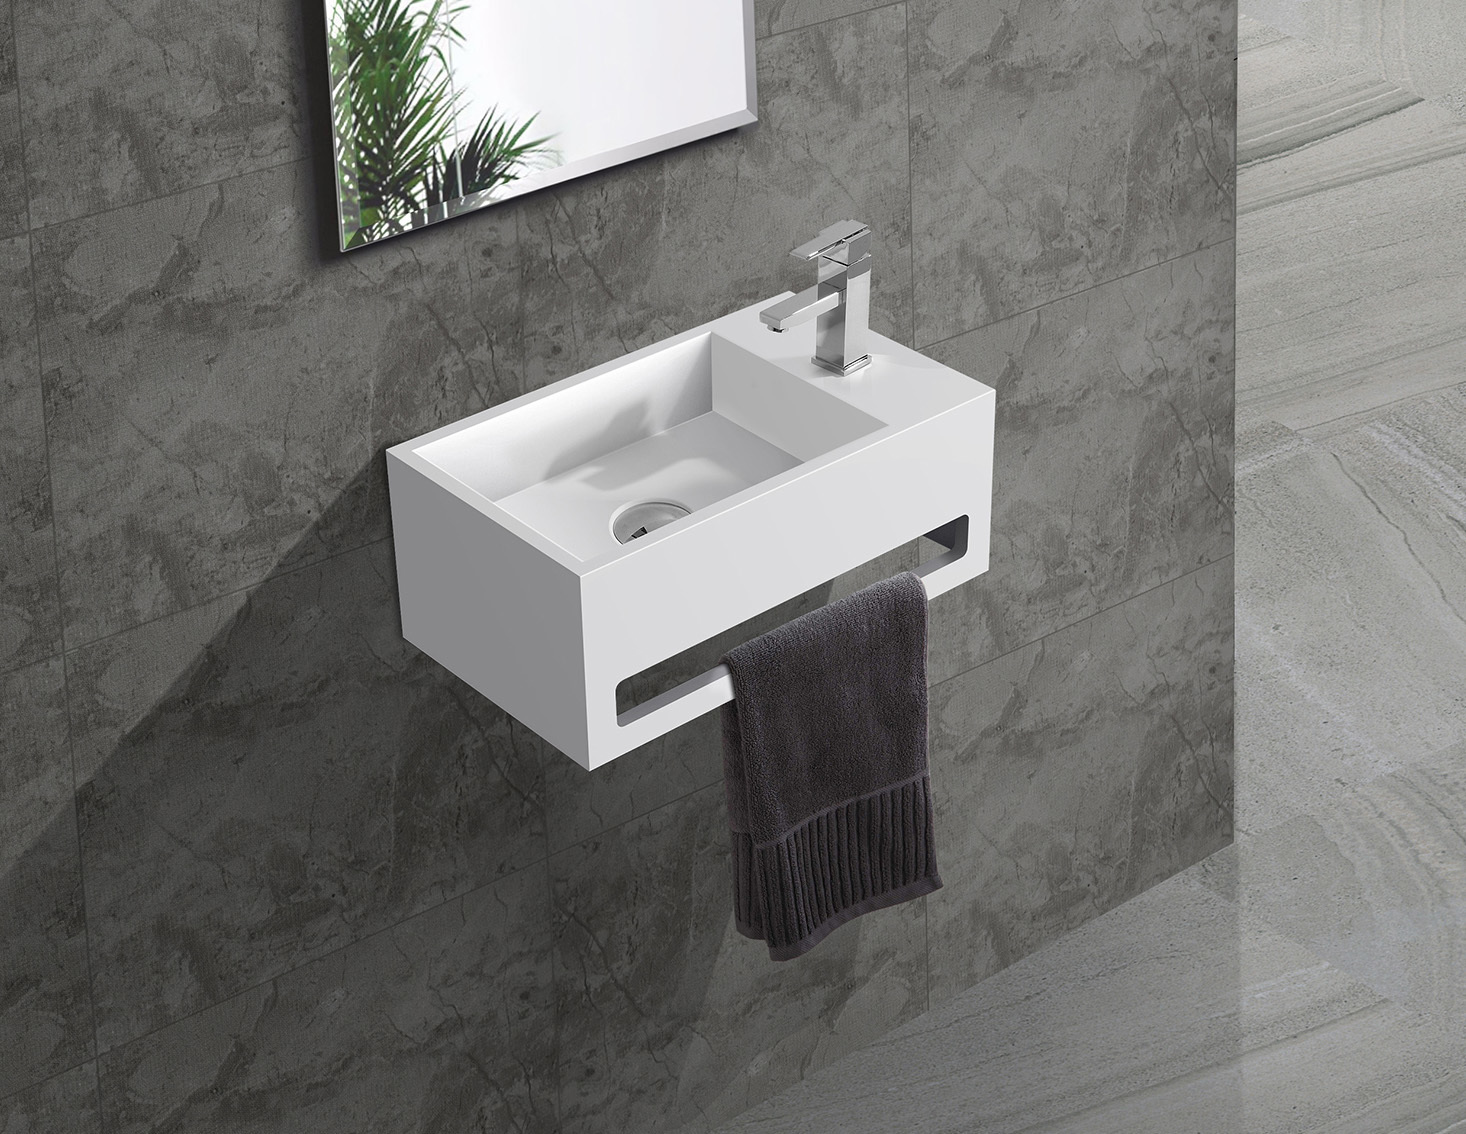 slope white ware mounted KingKonree Brand wall mounted wash basins supplier